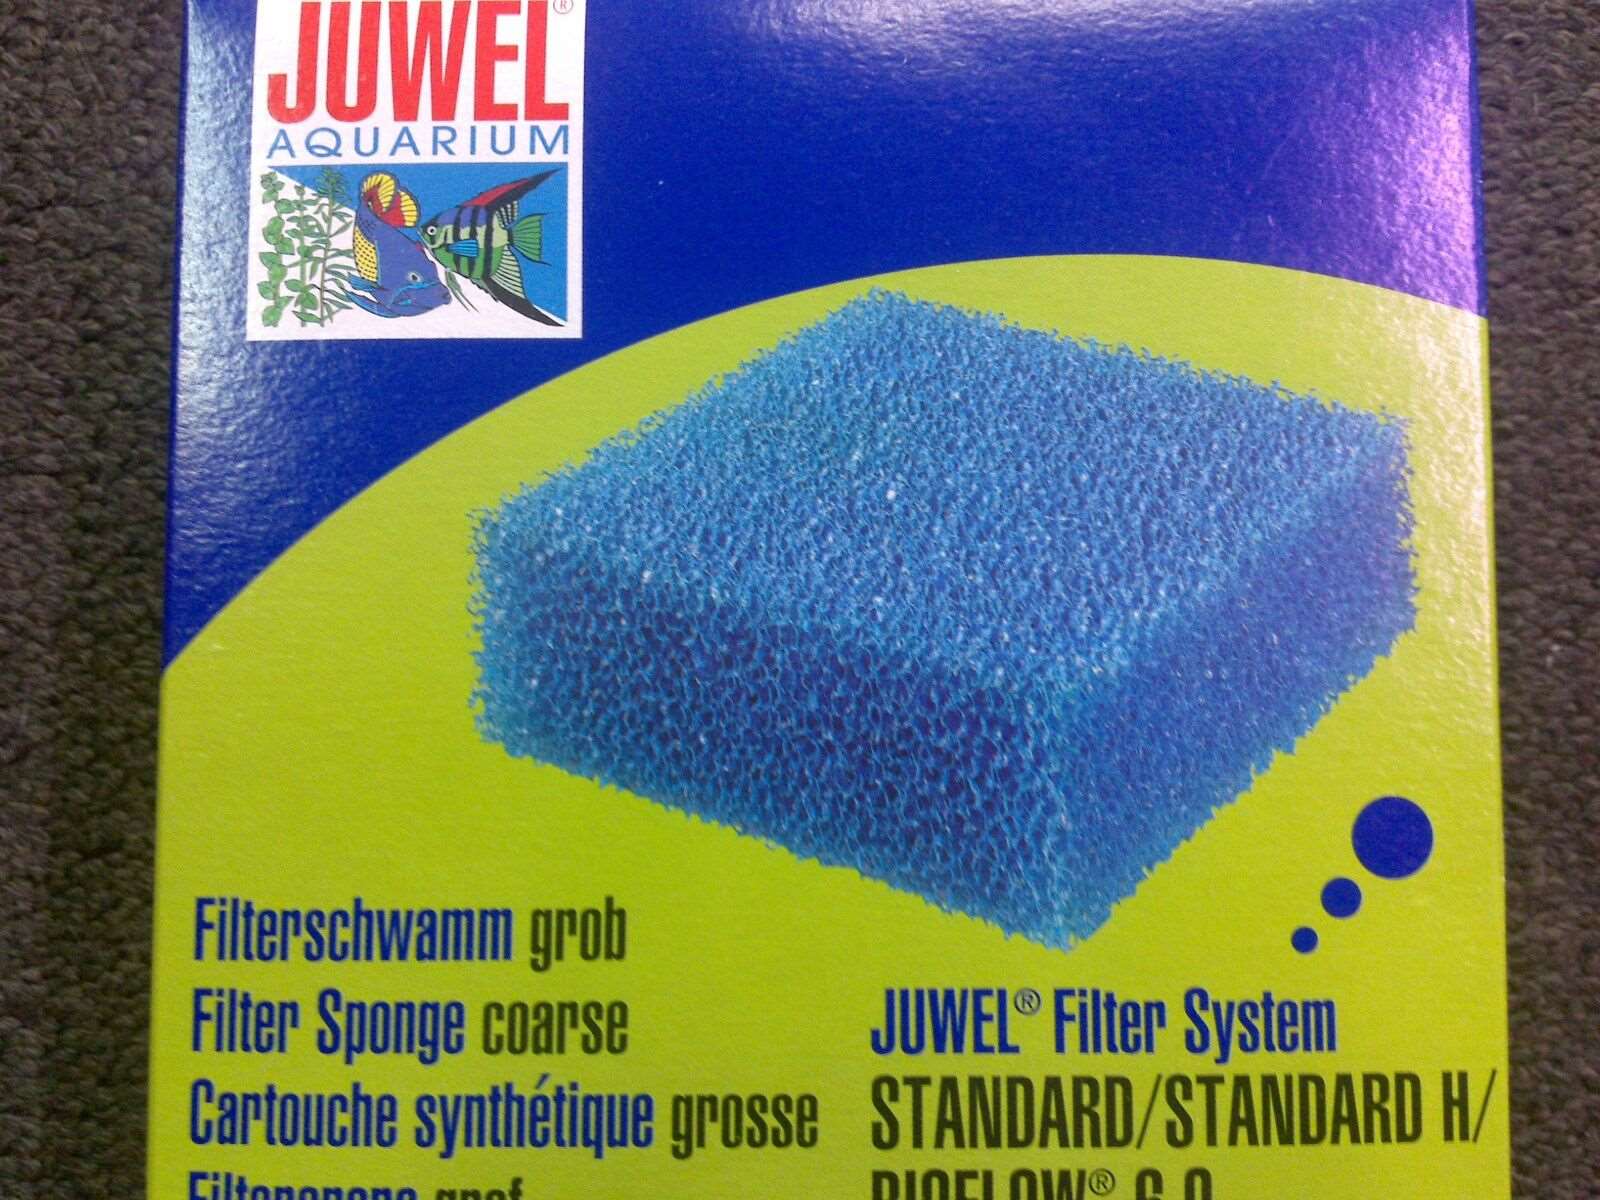 Juwel Standard Course sponges